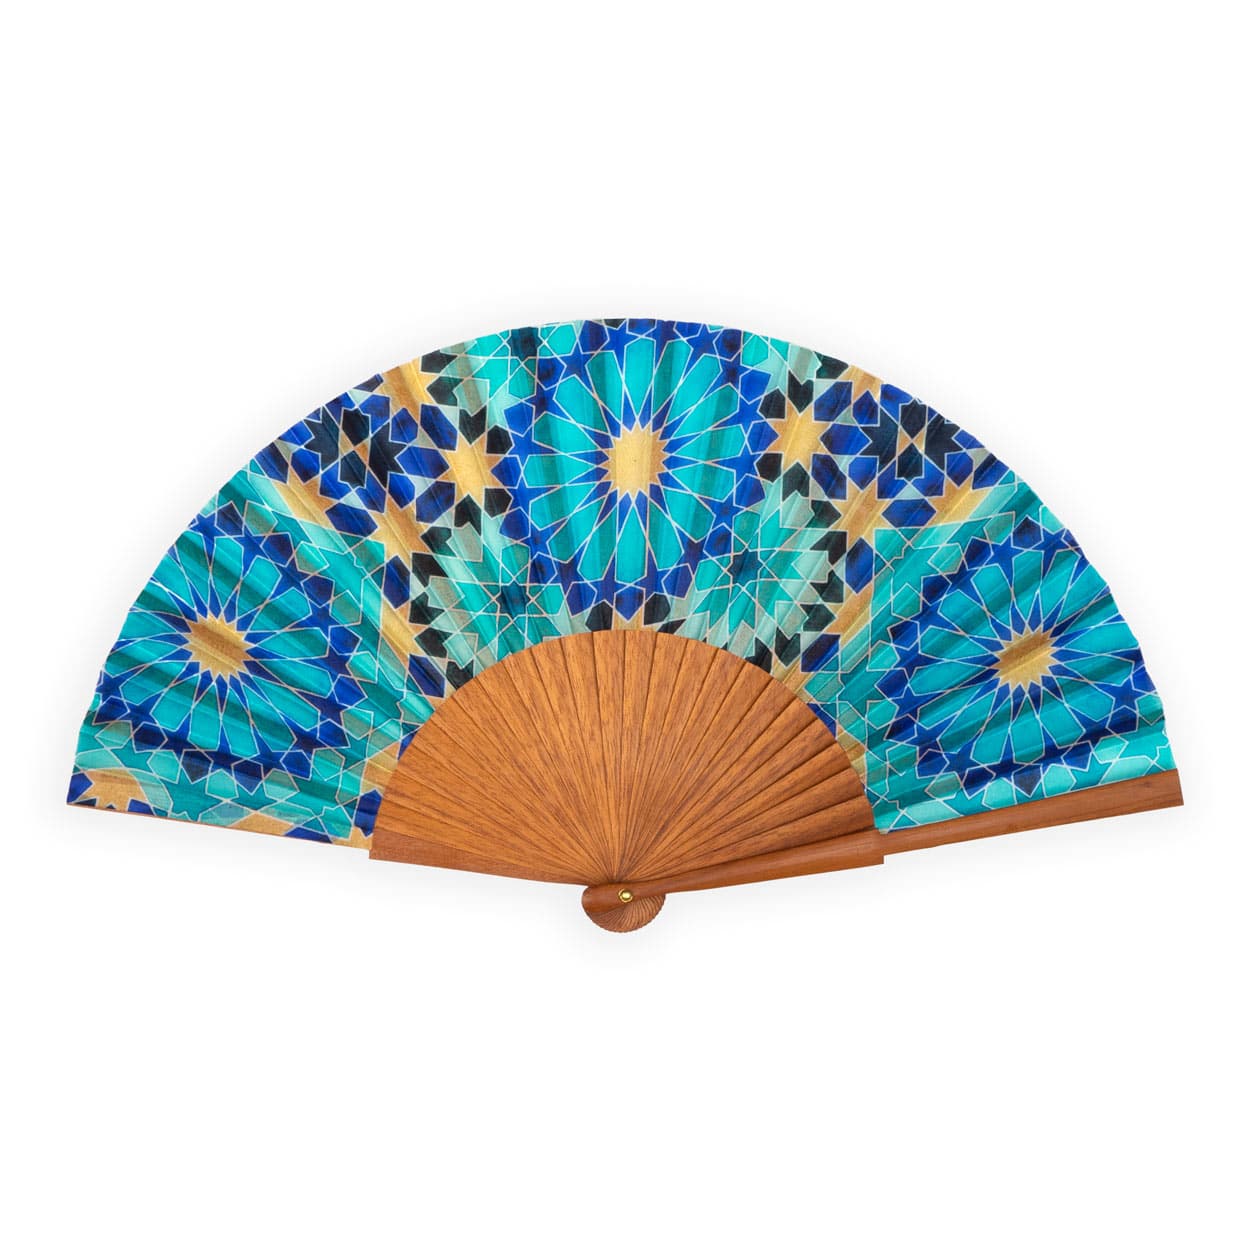 Blue and gold silk fan designed by Sandy Kurt